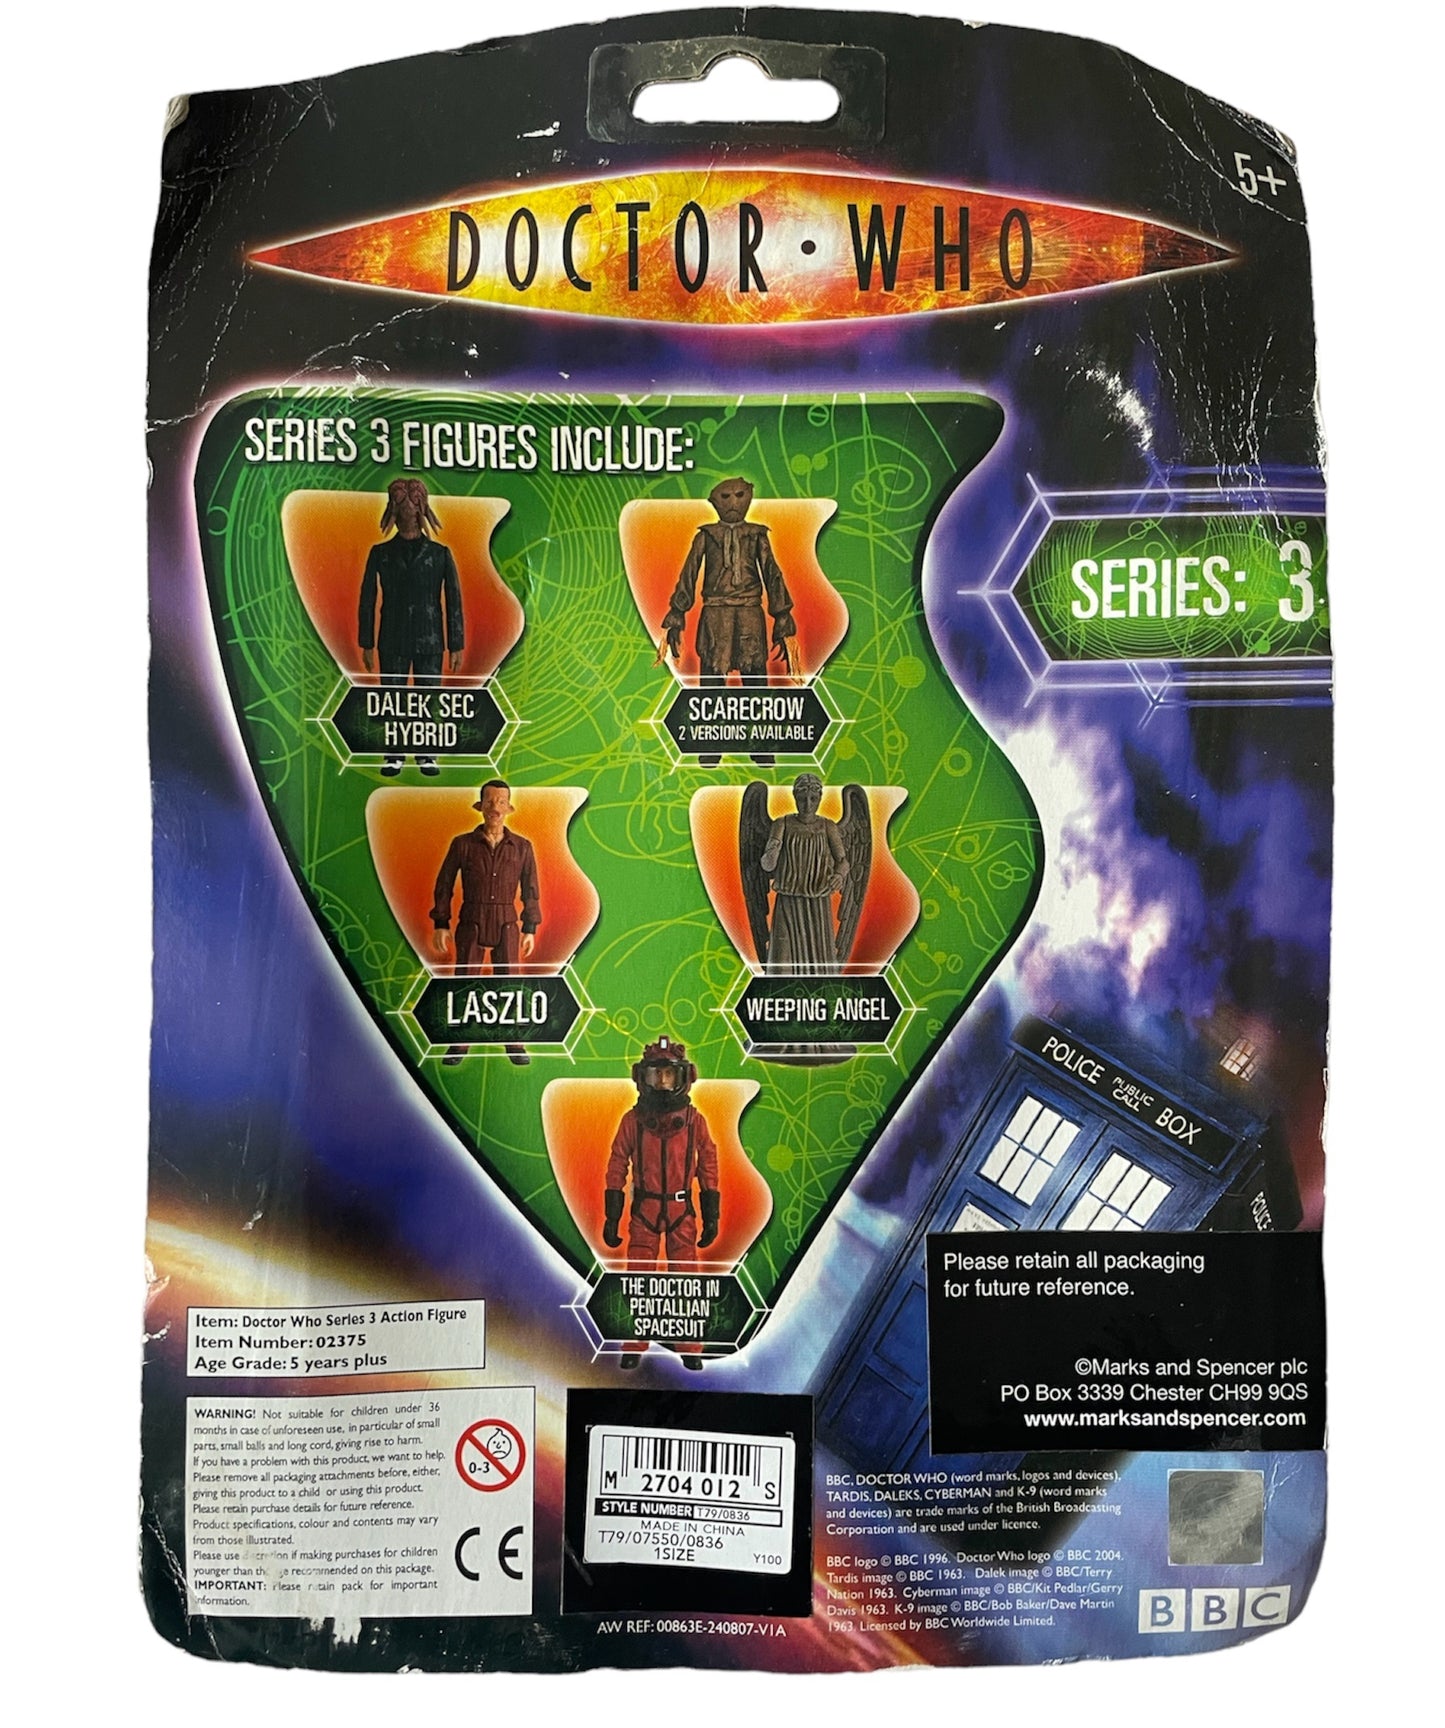 Vintage 2007 Dr Doctor Who Series 3 Daleks Sec Hybrid Highly Detailed Poseable Action Figure - Brand New Factory Sealed Shop Stock Room Find